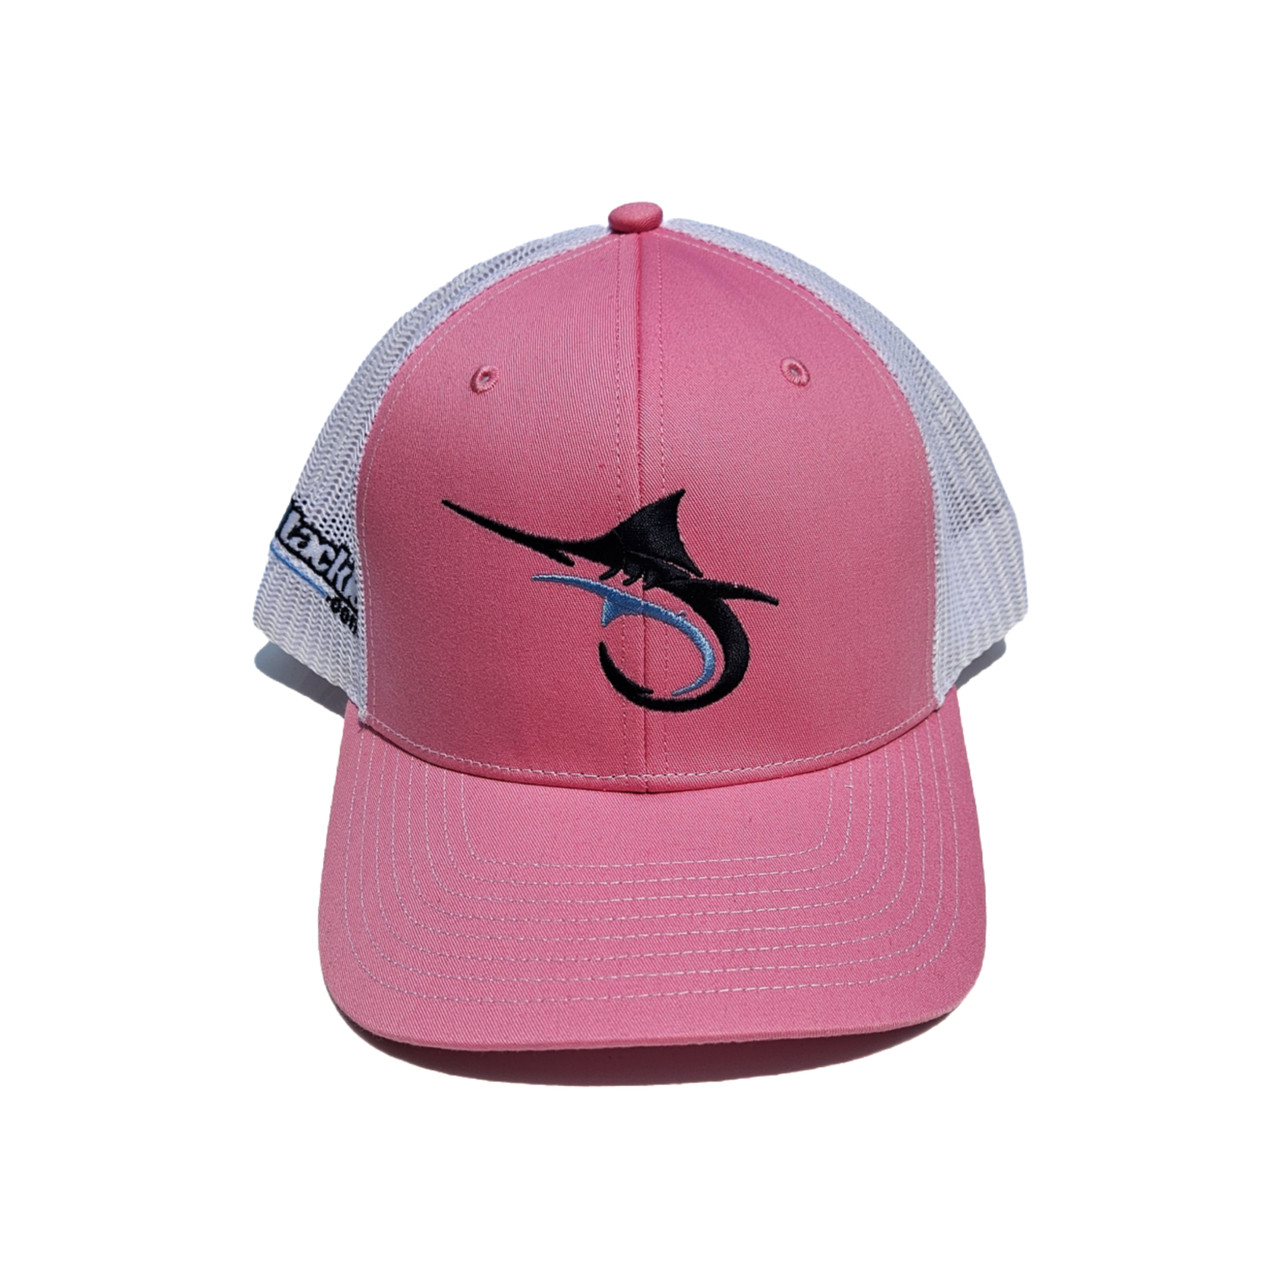 Alltackle Fishing Hat - Marlin Hook - Pink